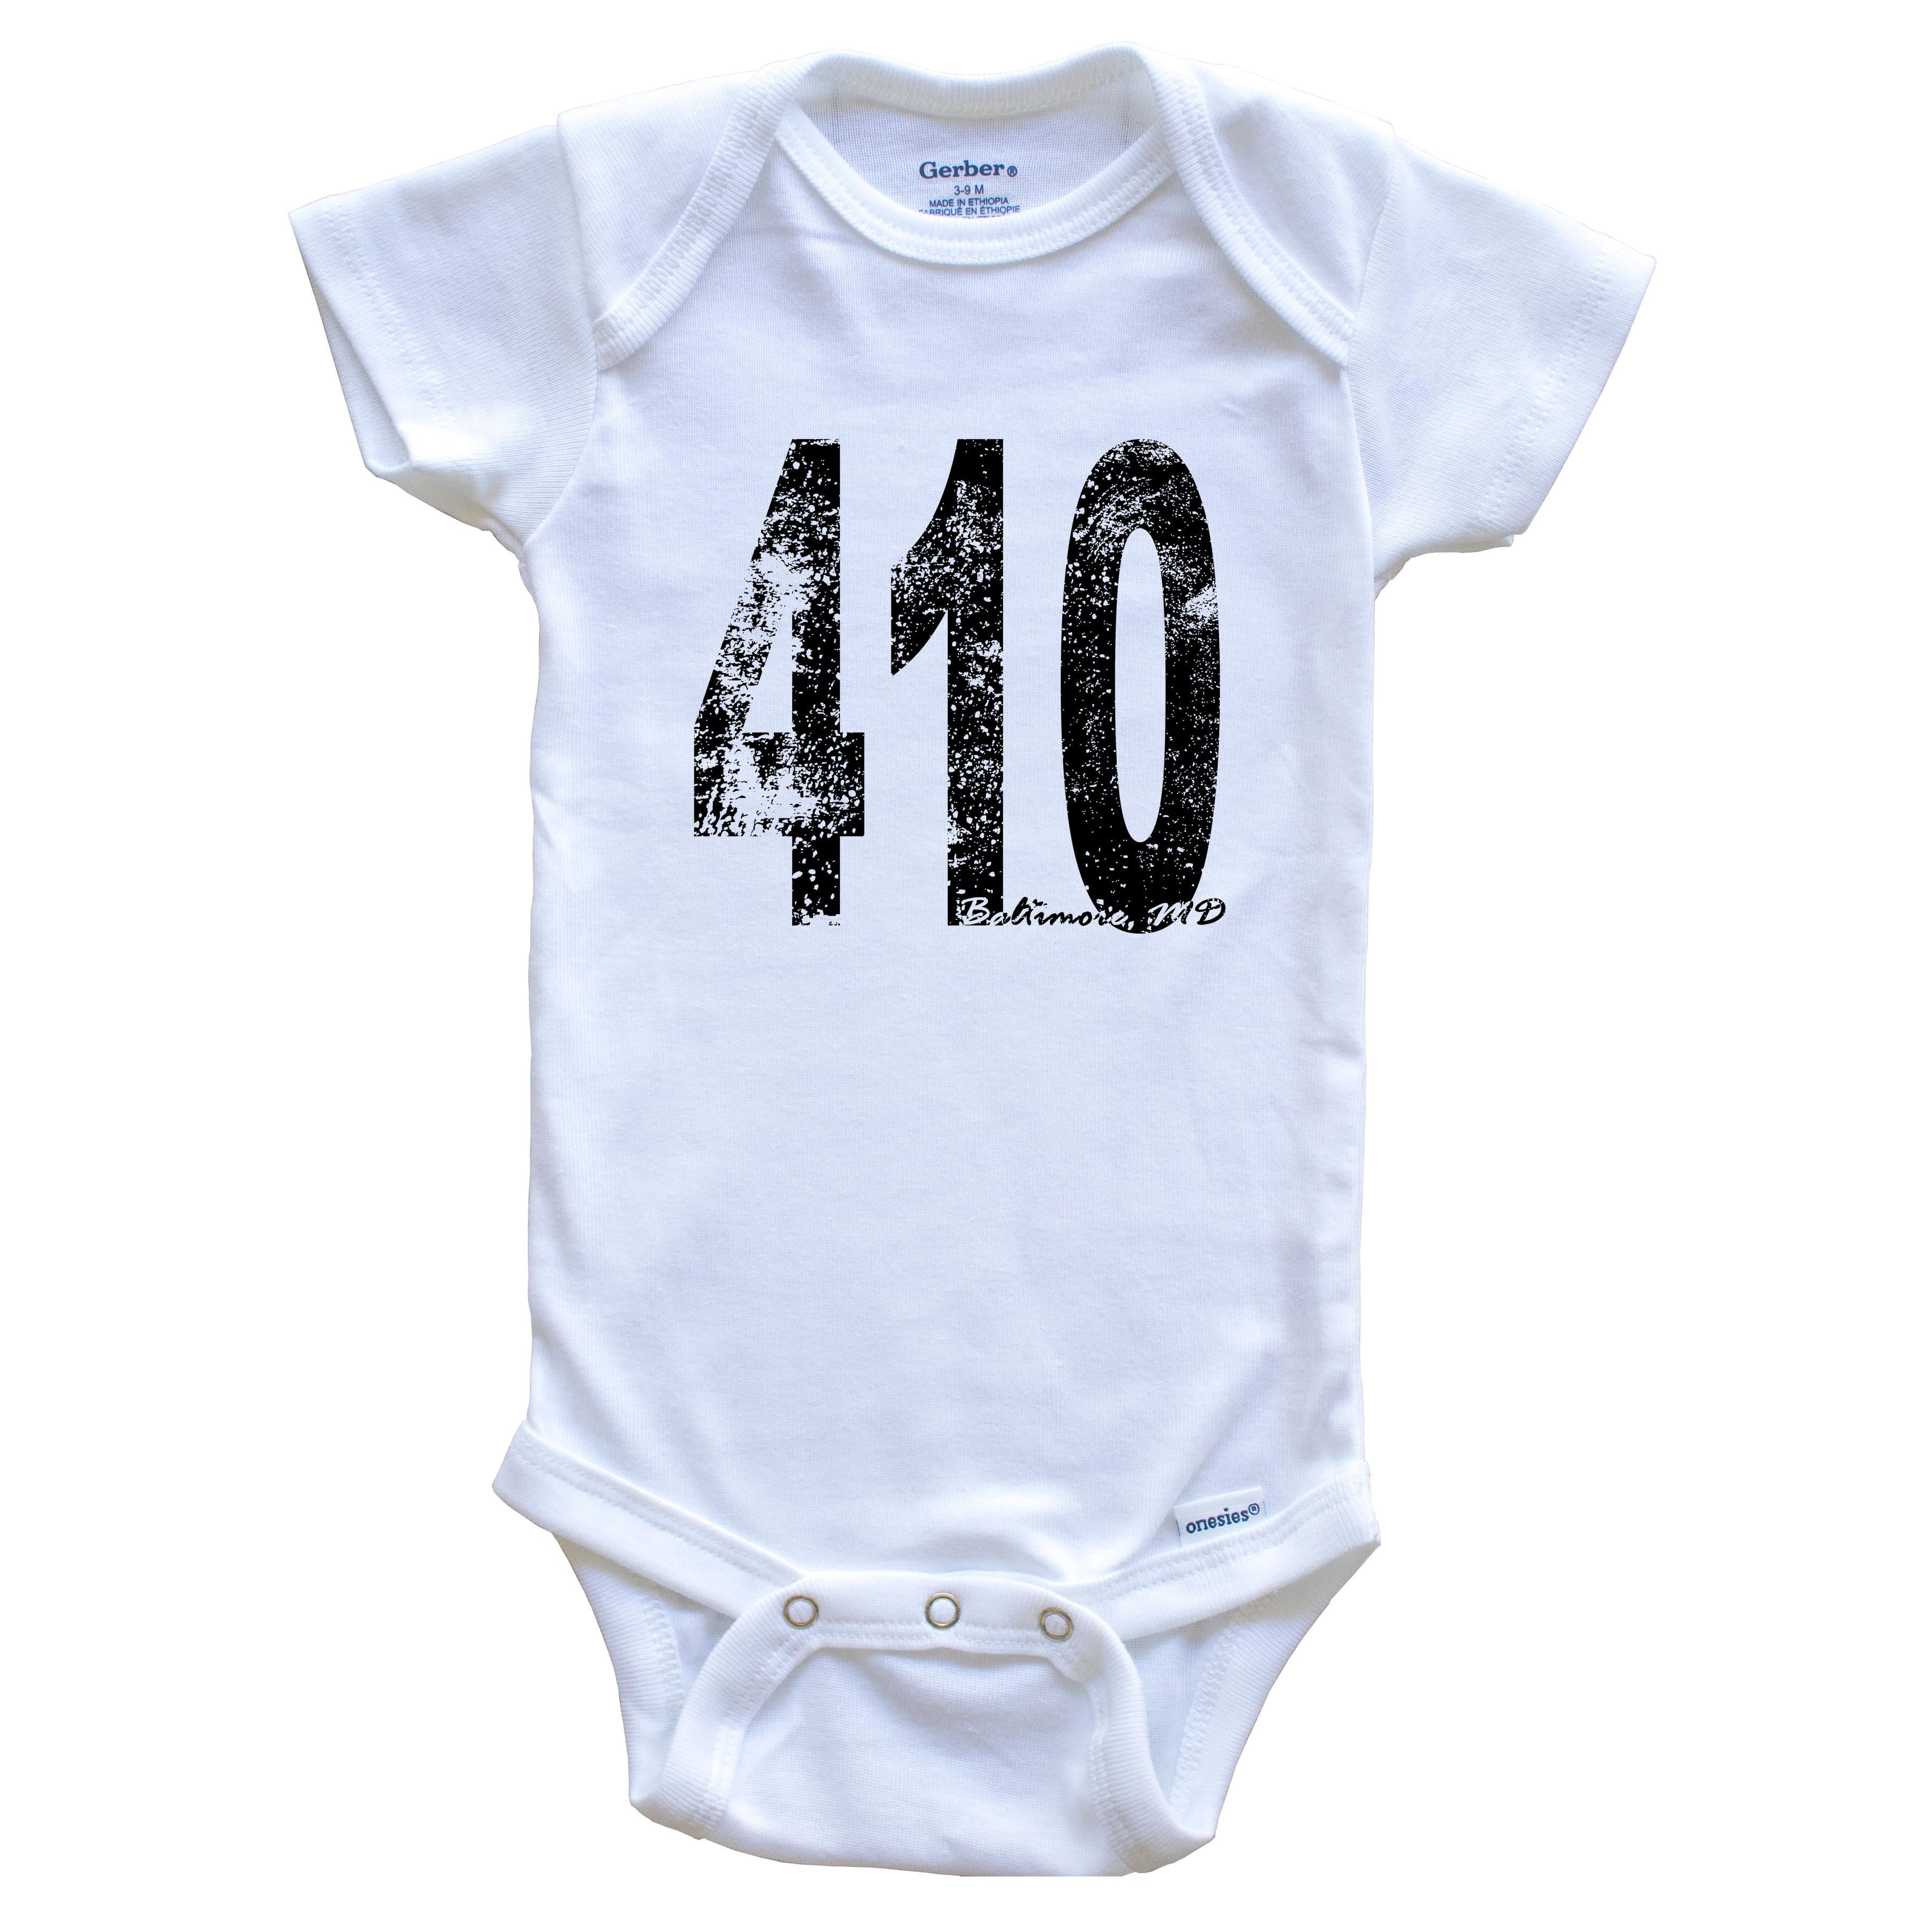 410 Baltimore Maryland Area Code Baby Bodysuit One Piece Baby Bodysuit 3 6 Months White Walmart Com